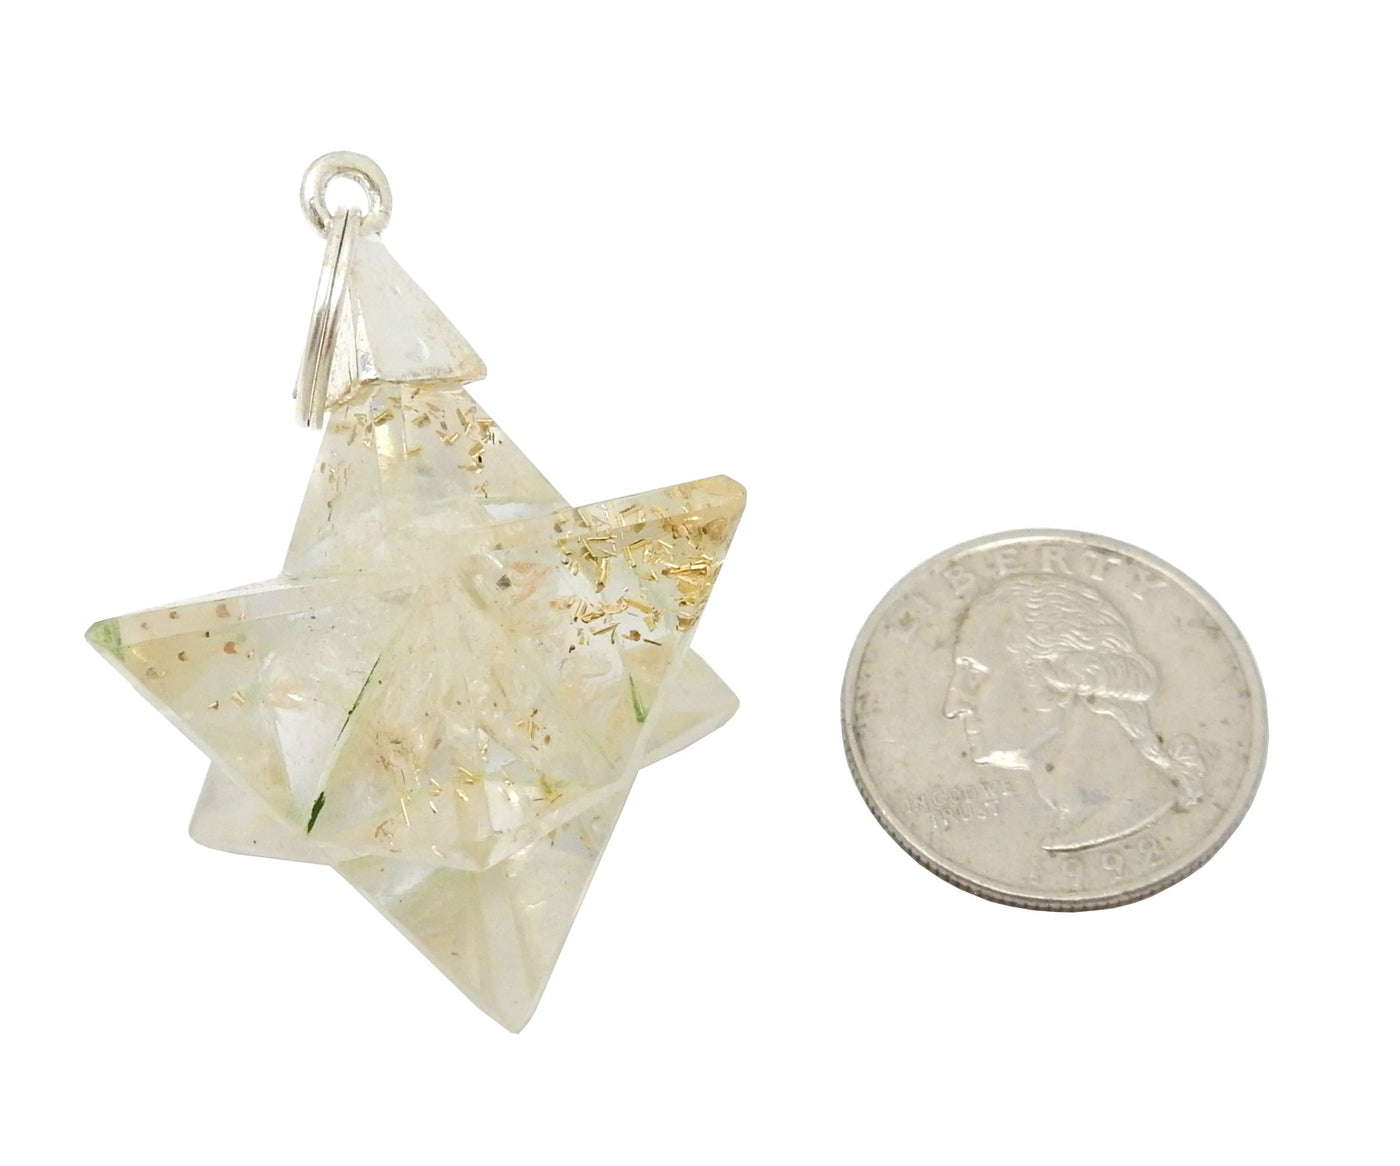 Merkaba - Merkaba Star Orgone Silver Toned Bail Pendant - close up of white one next to a quarter